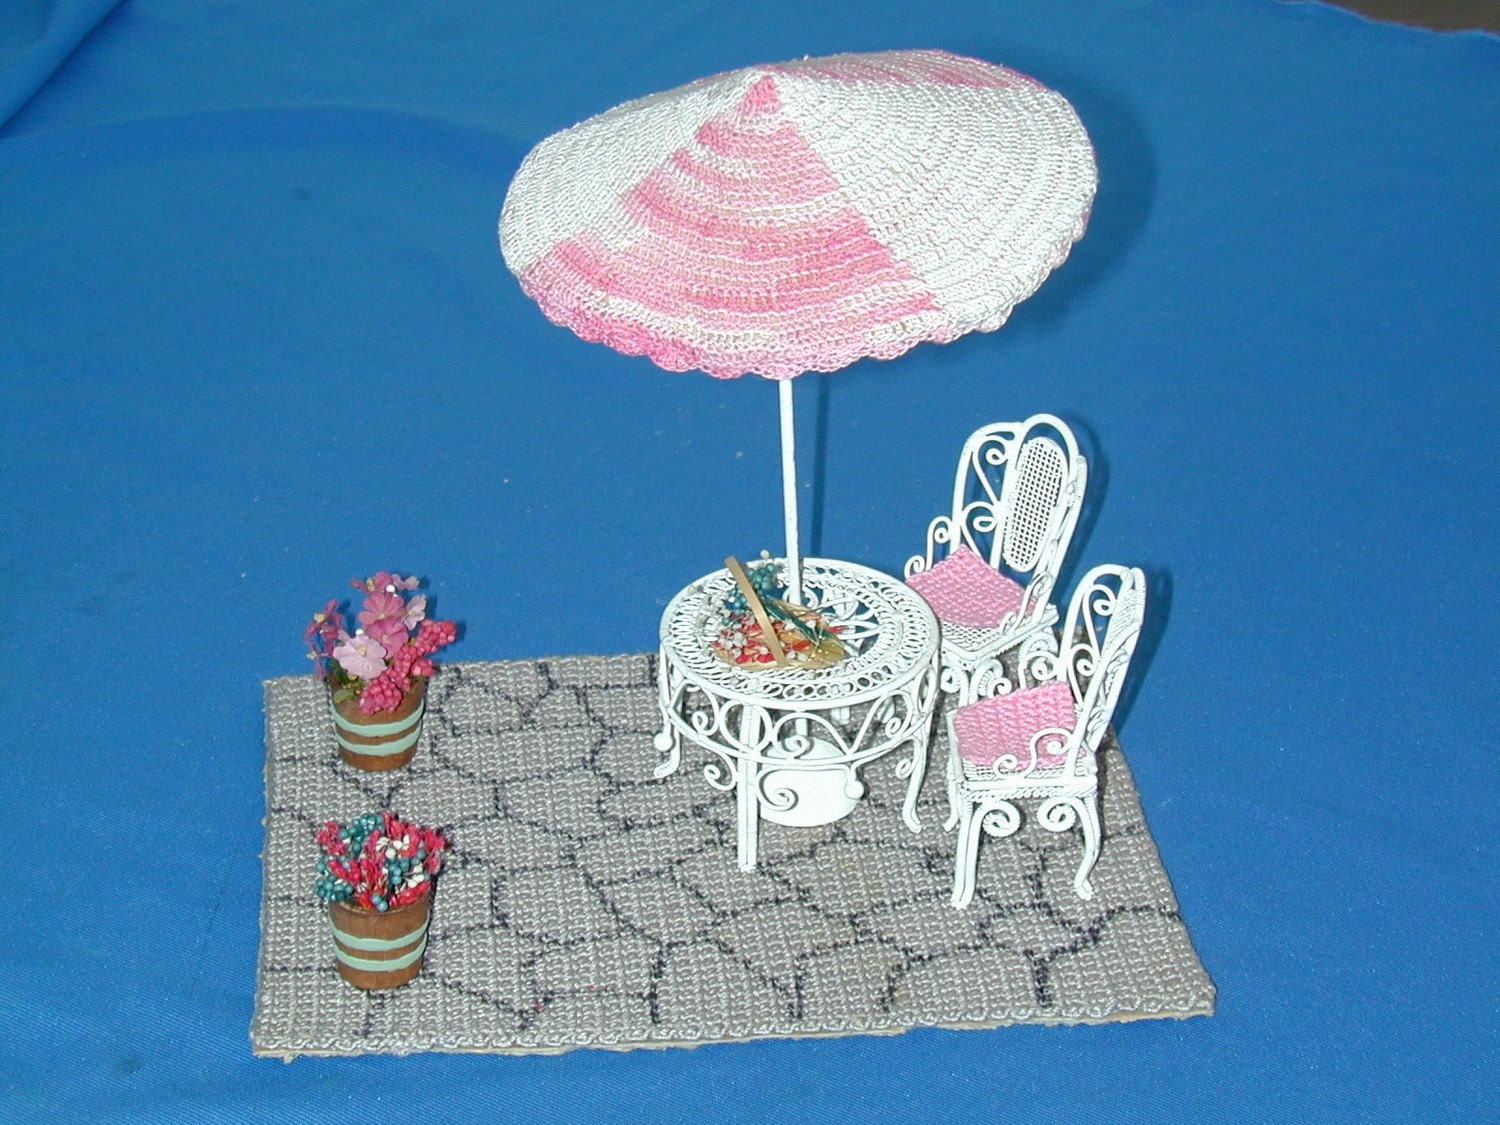 Patio Set inc. Patio, Table, Chairs, Umbrella & Flowers Dollhouse Miniature